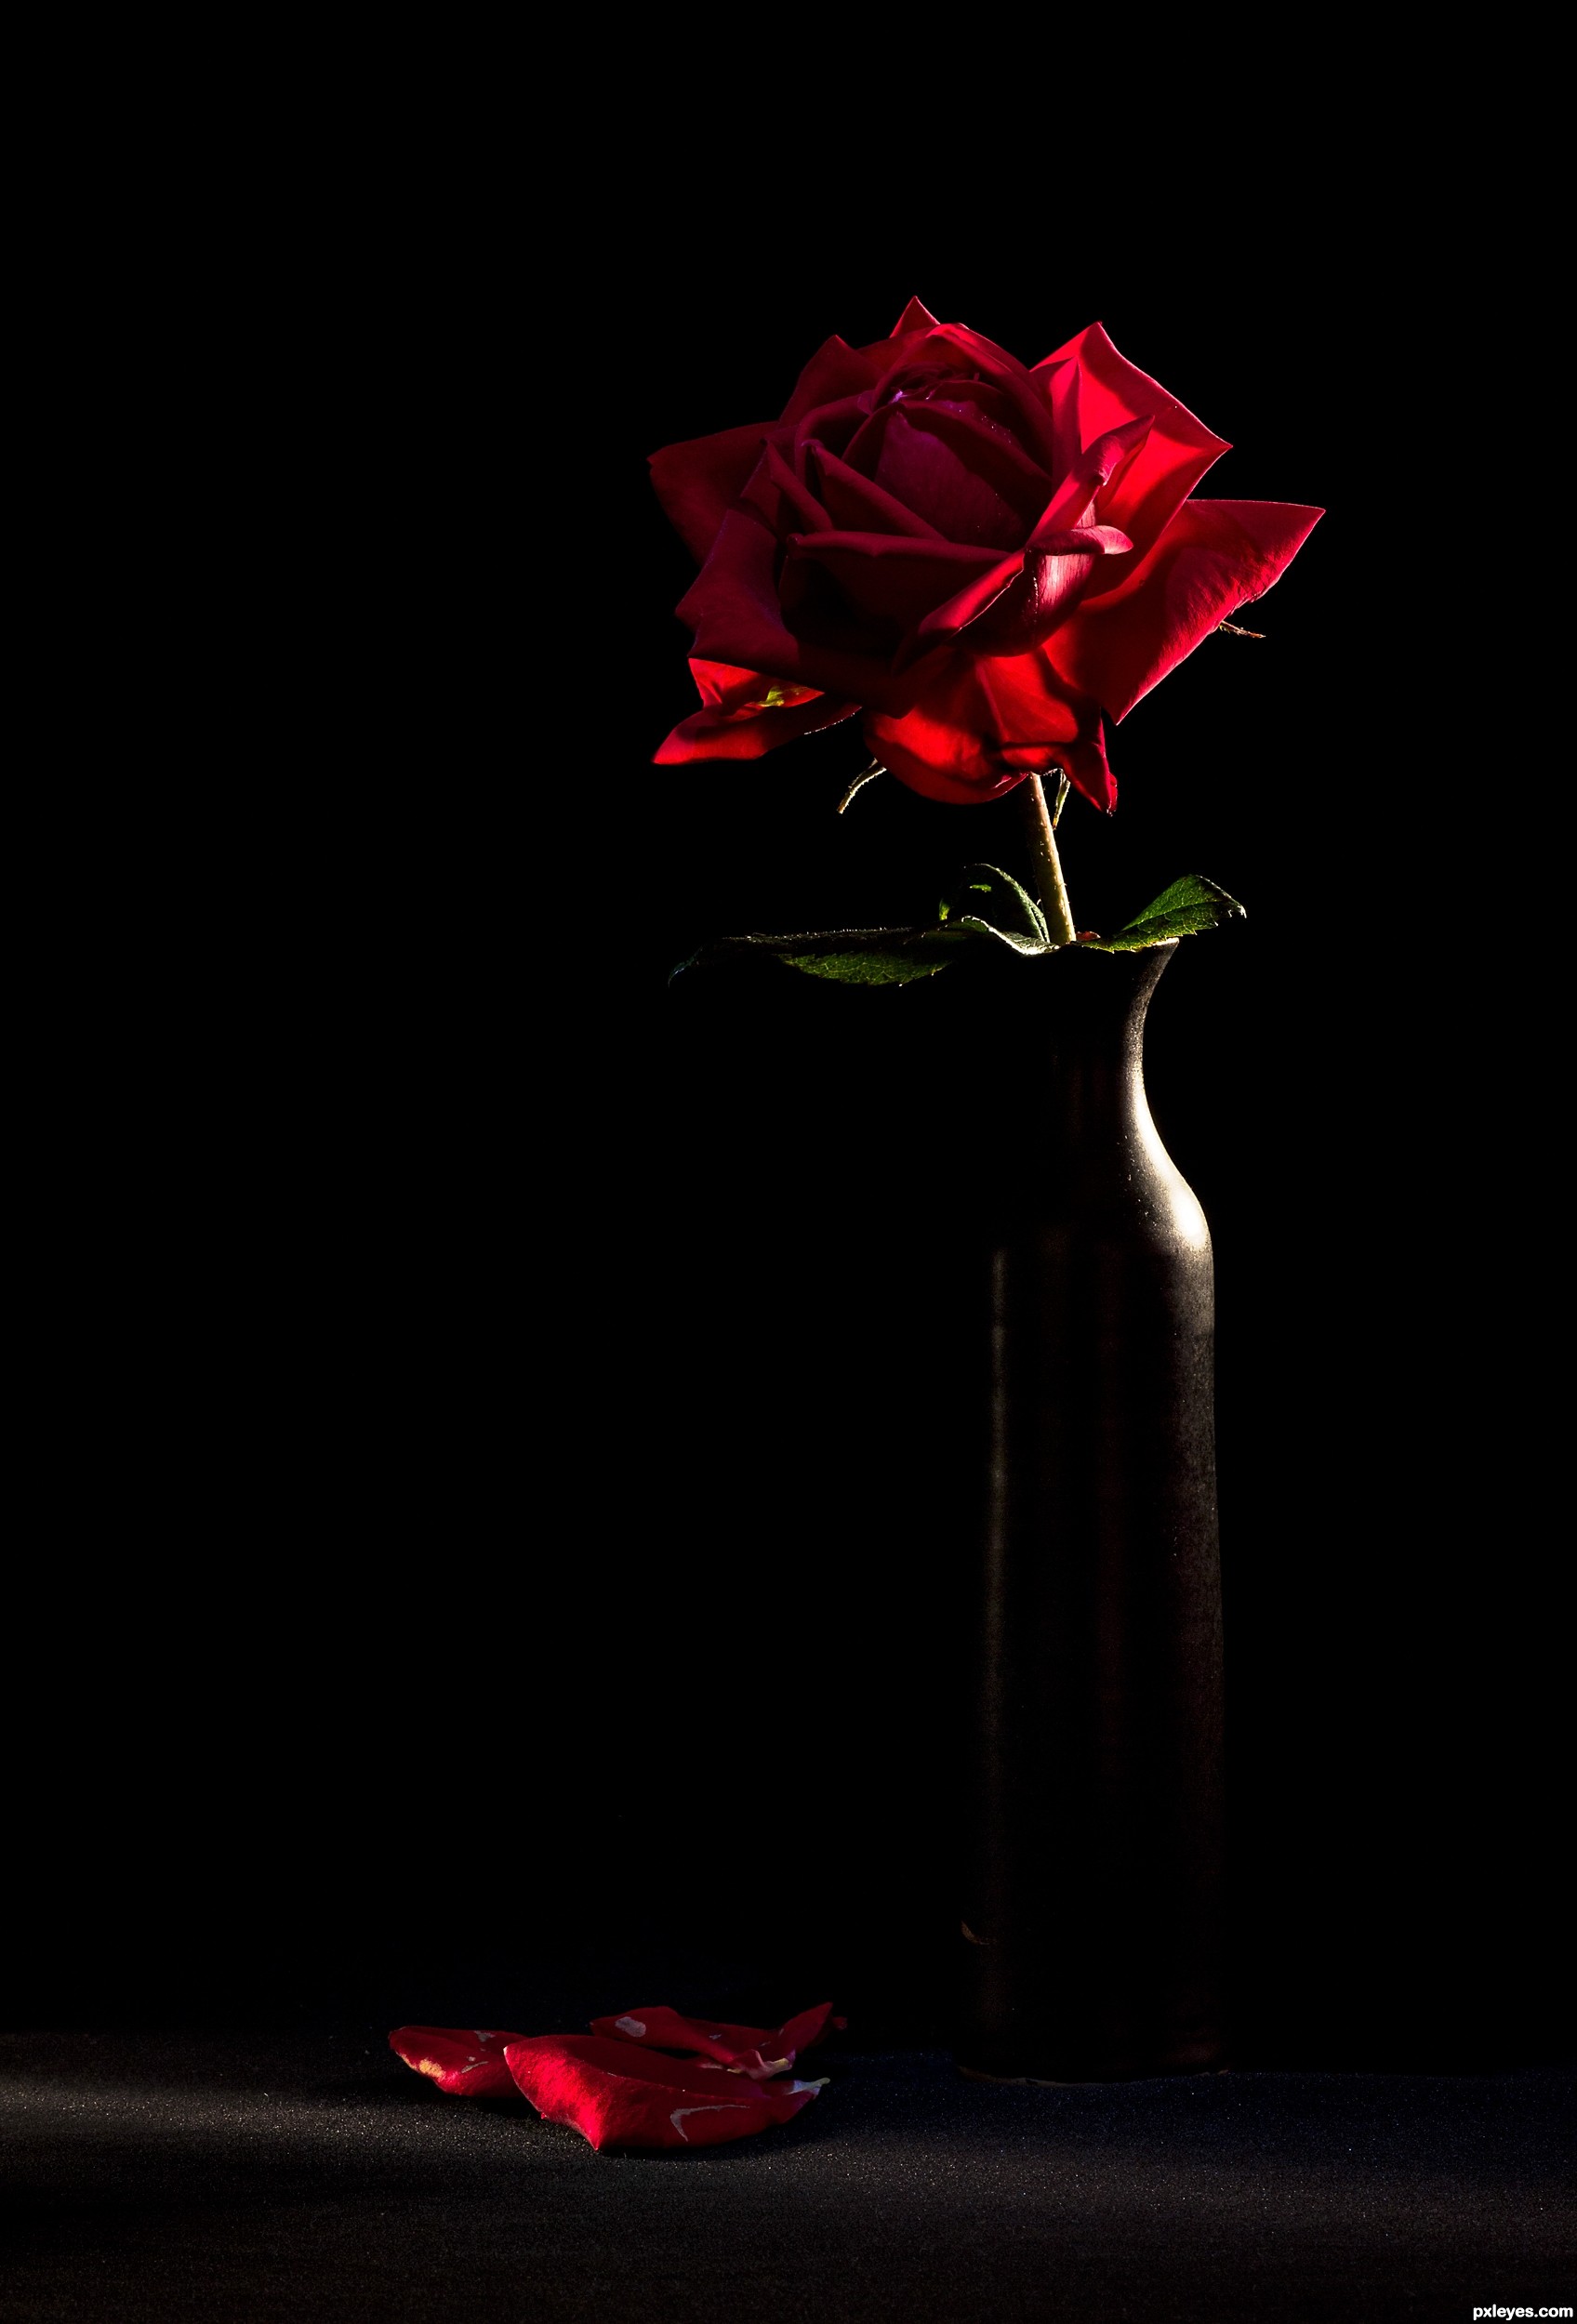 [69+] Red Rose On Black Background | WallpaperSafari.com